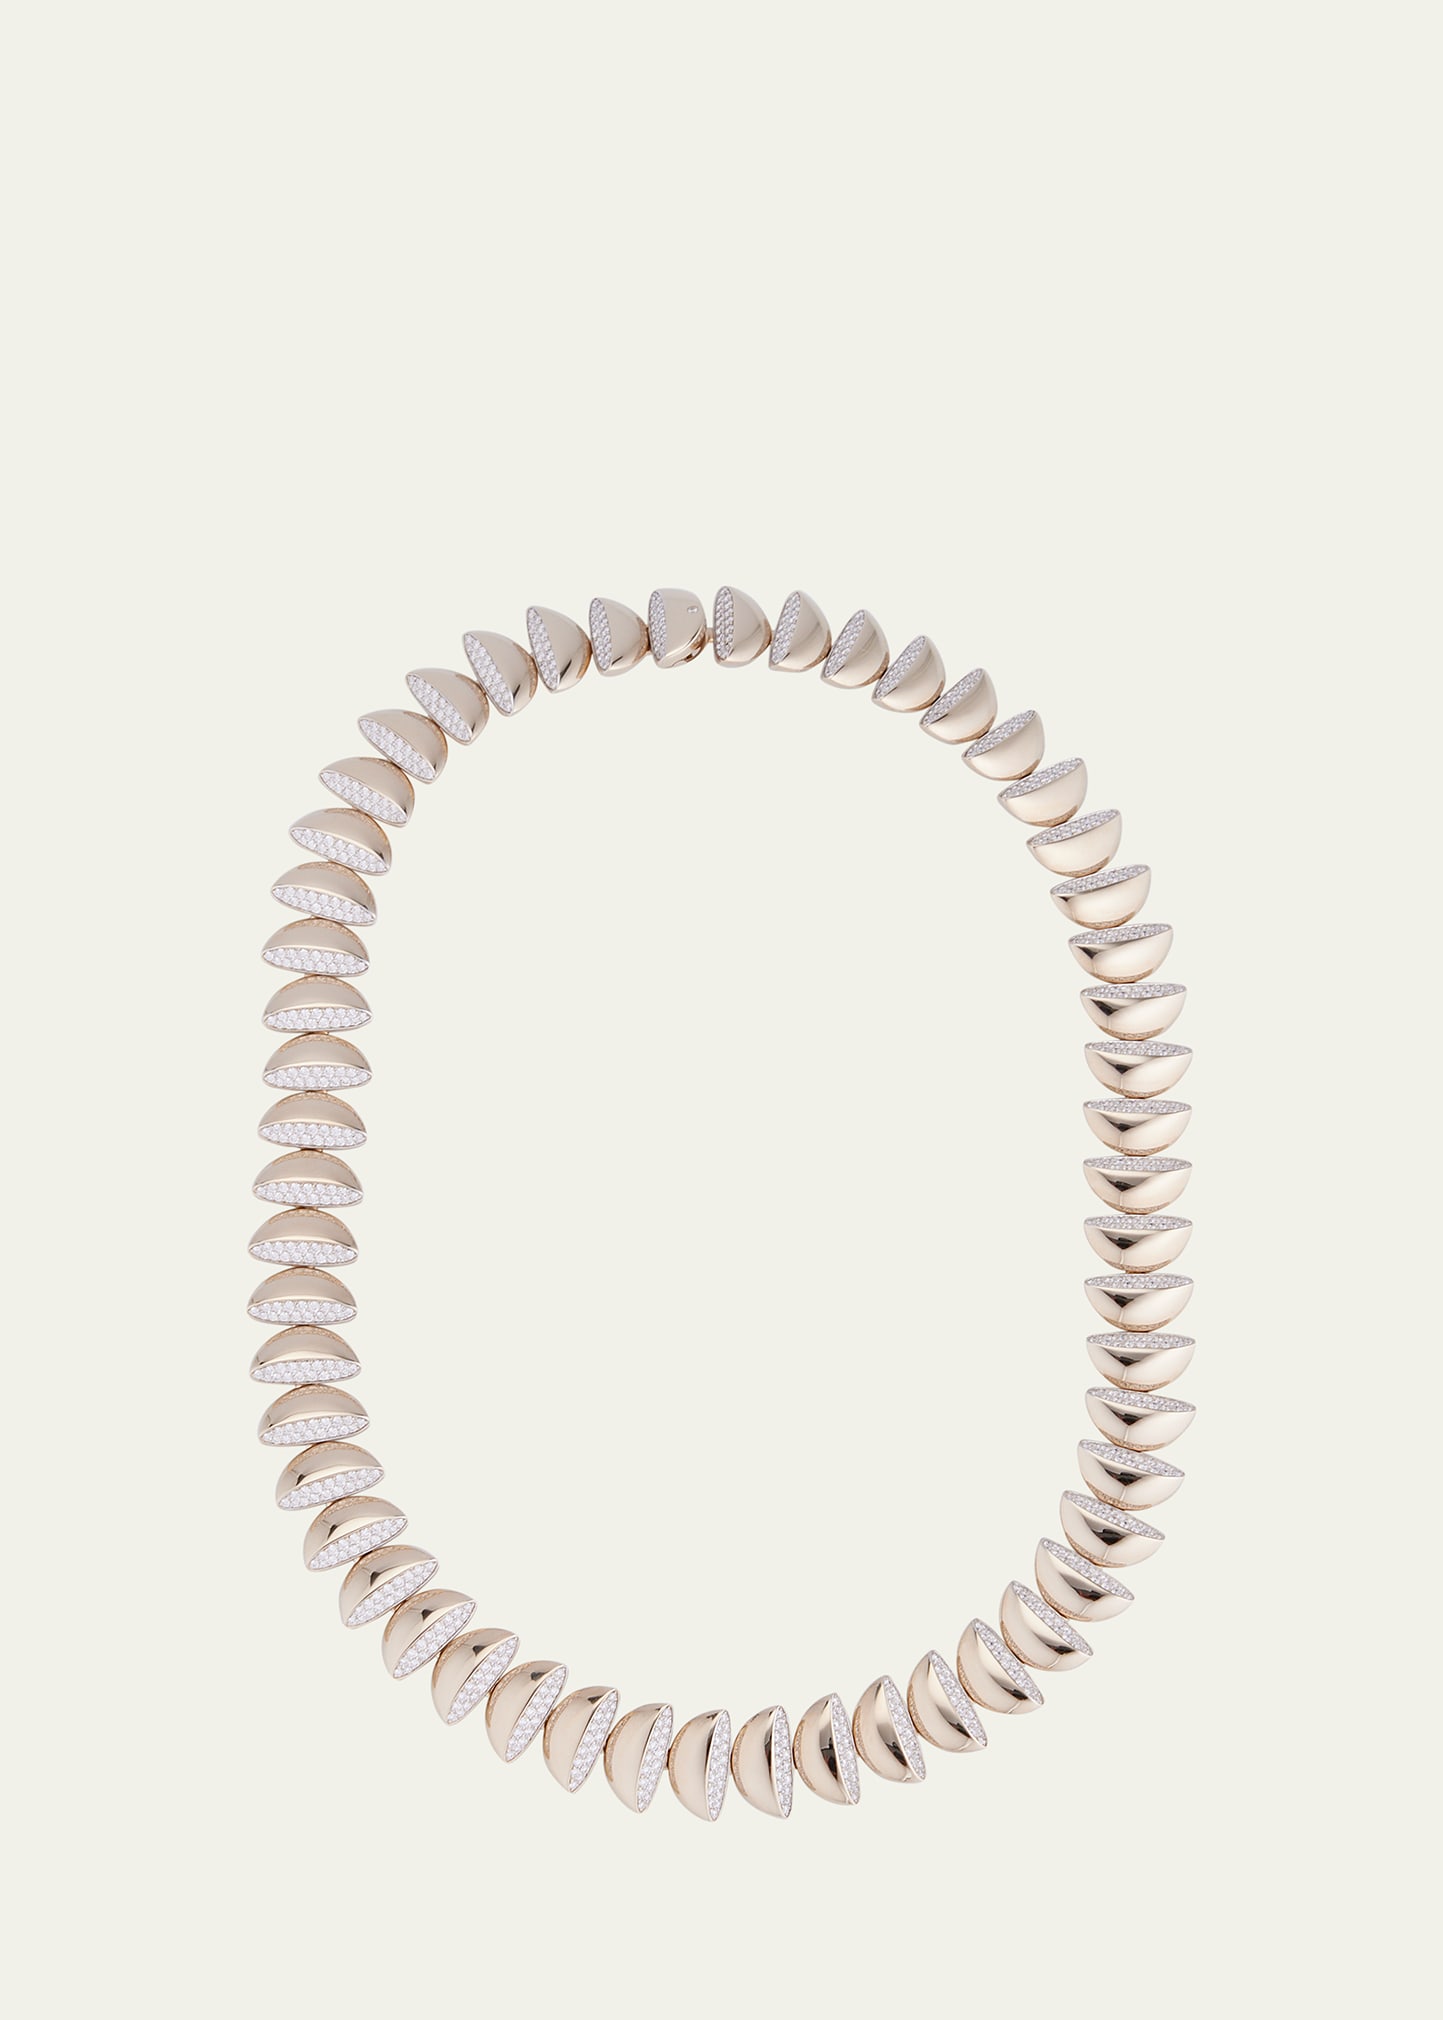 18K White Gold Eclisse Endless Diamond Necklace